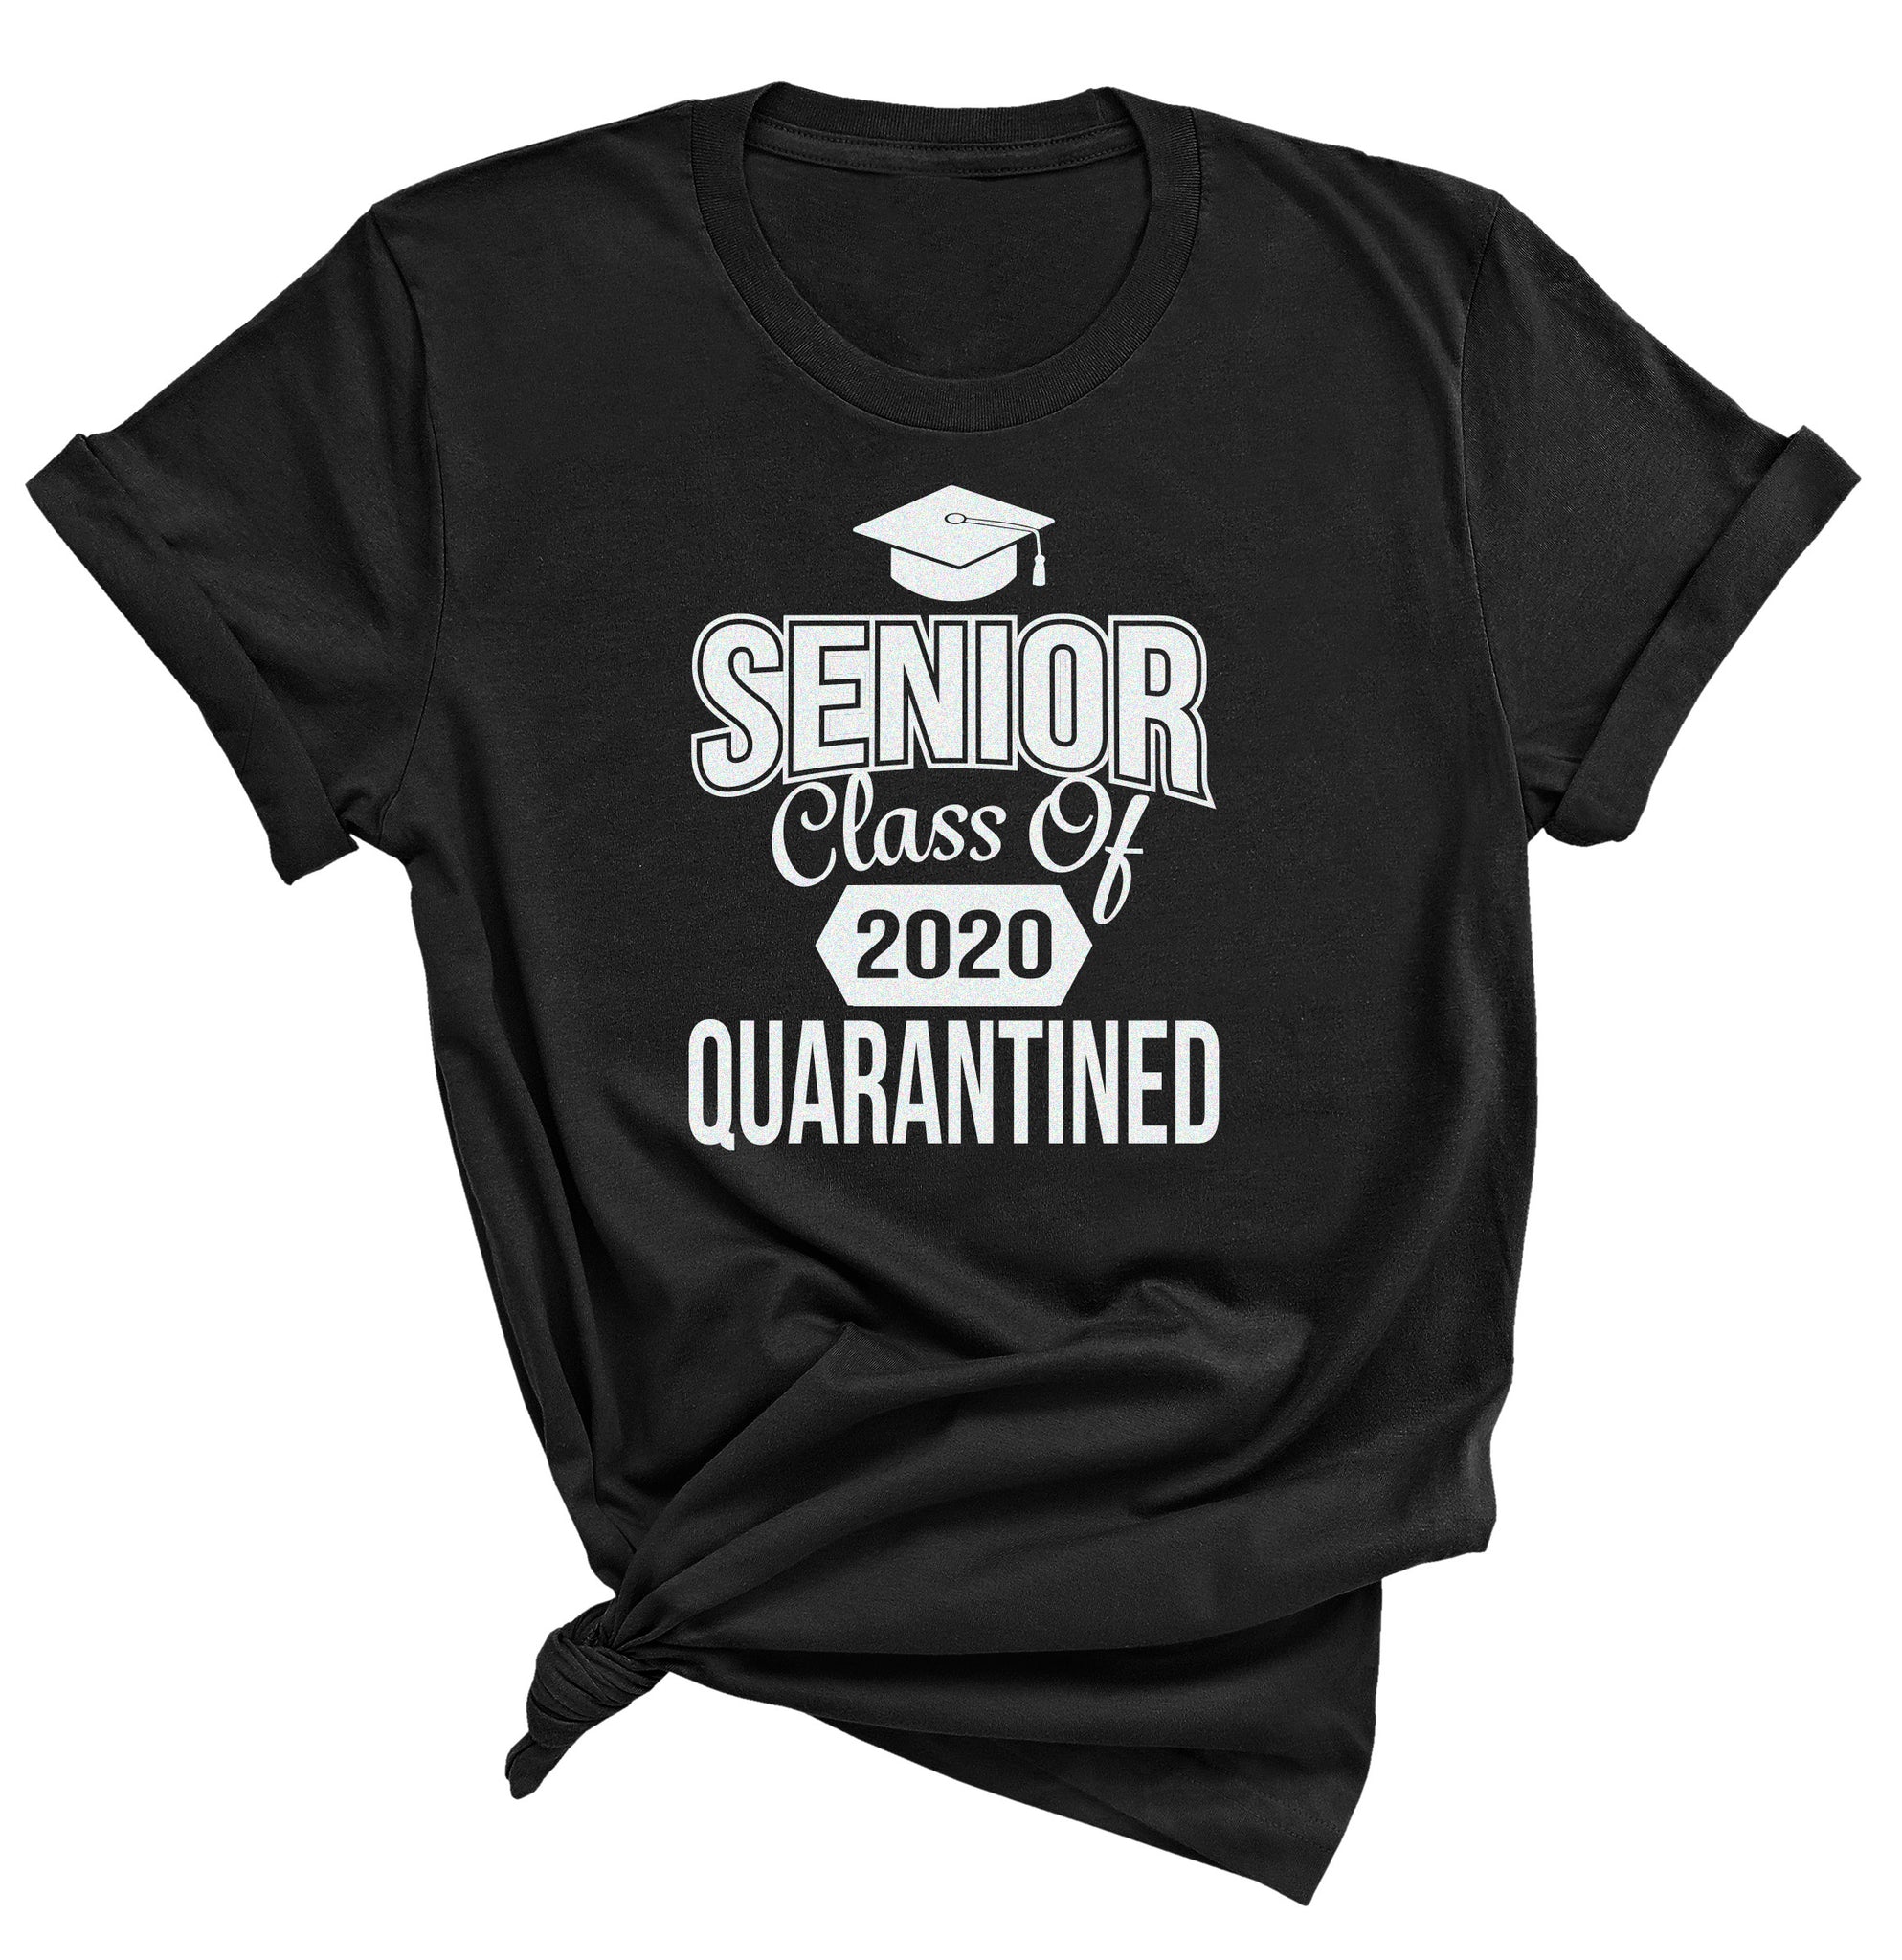 Senior Class of 2020 Quarantined Shirt